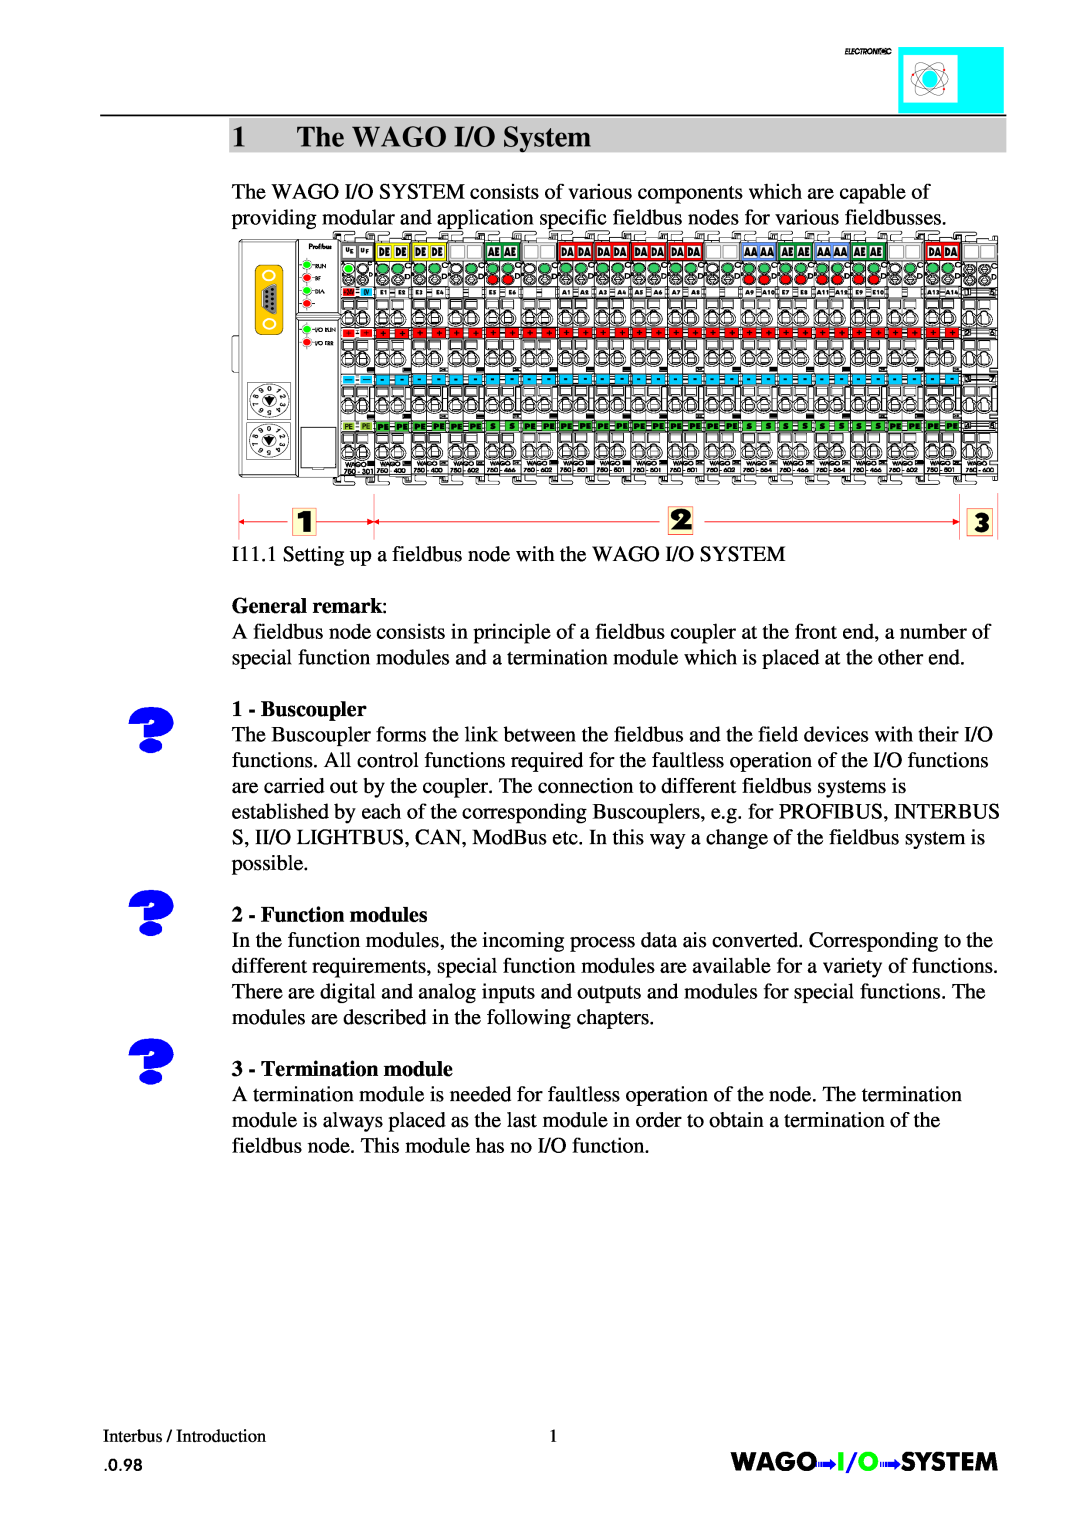 Quatech INTERBUS S manual The WAGO I/O System, General remark, Buscoupler, Function modules, Termination module 